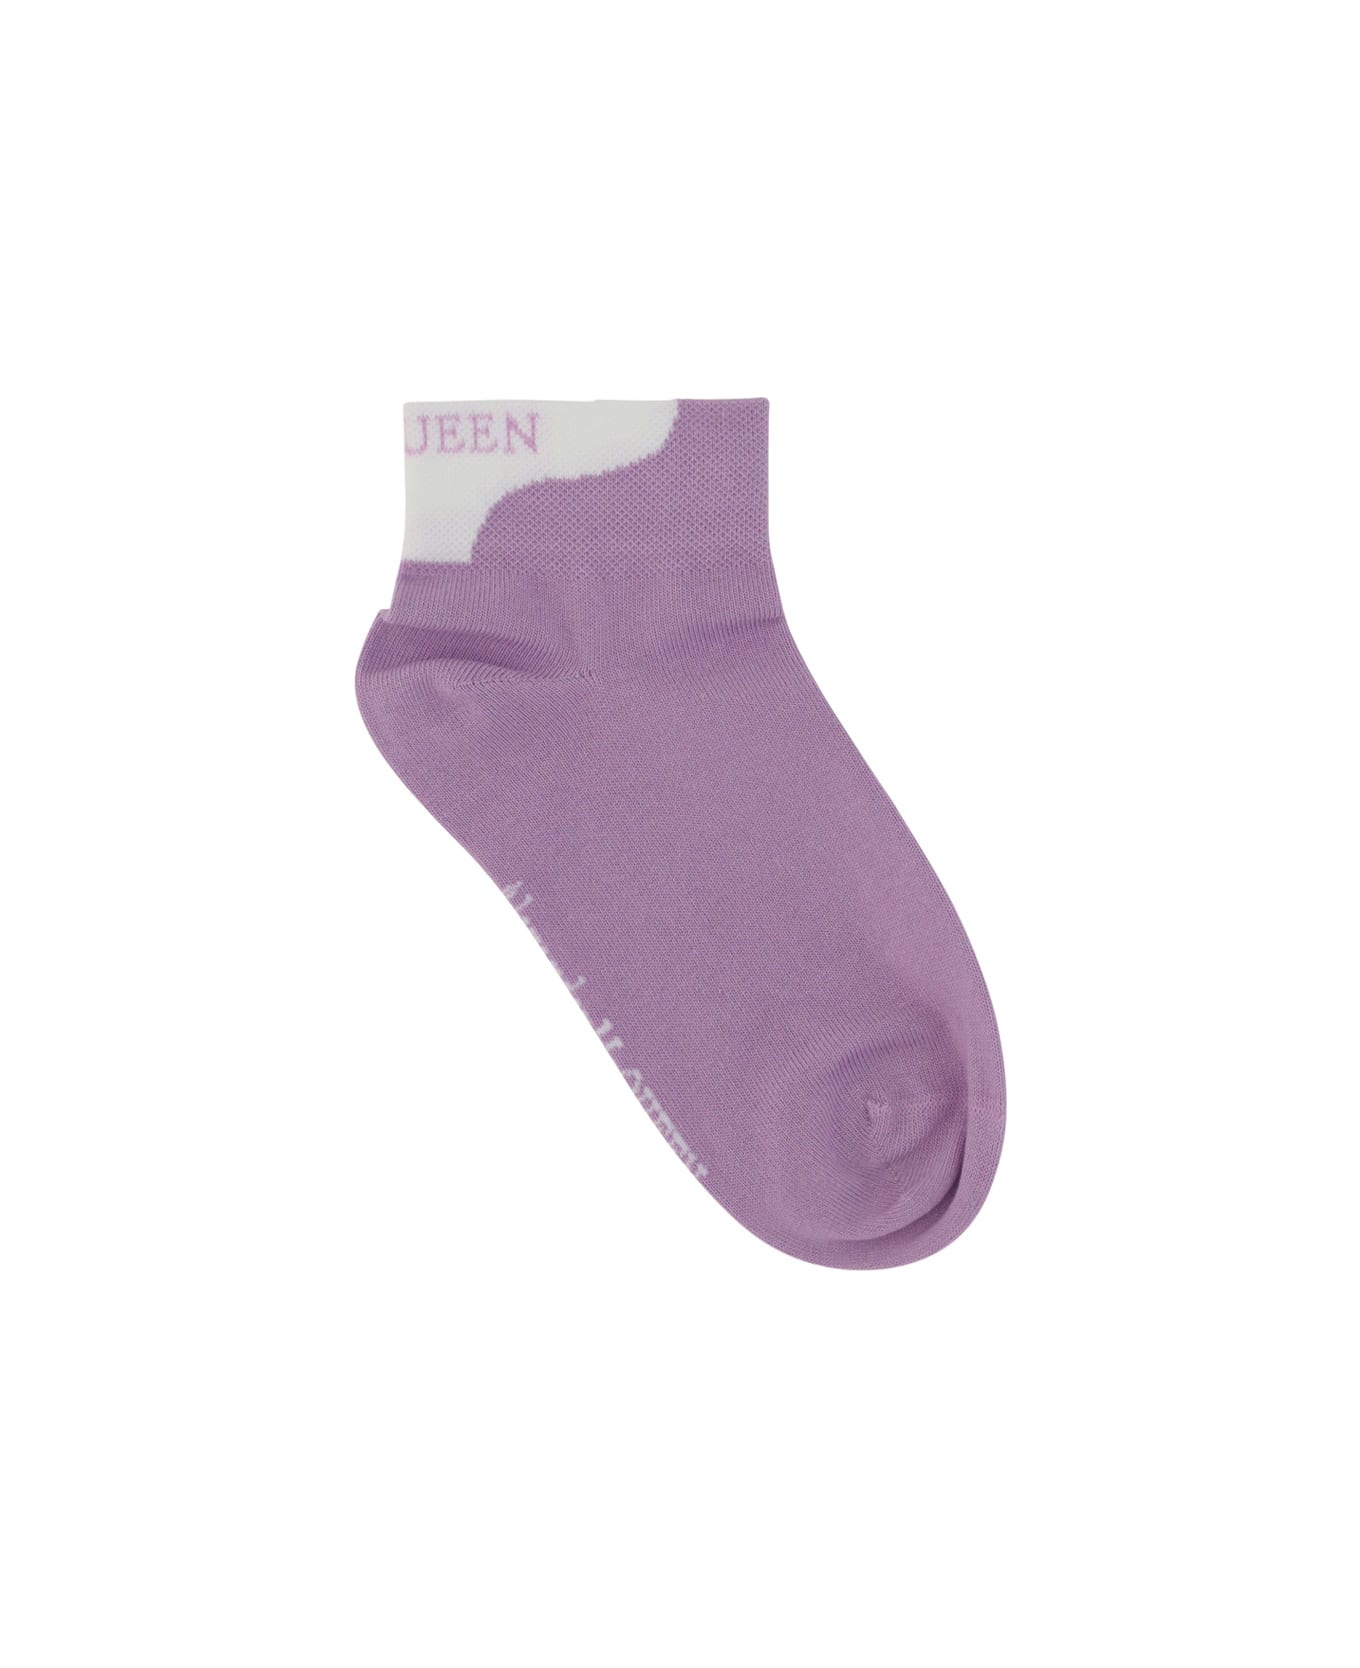 Alexander McQueen Socks - Lilac/white